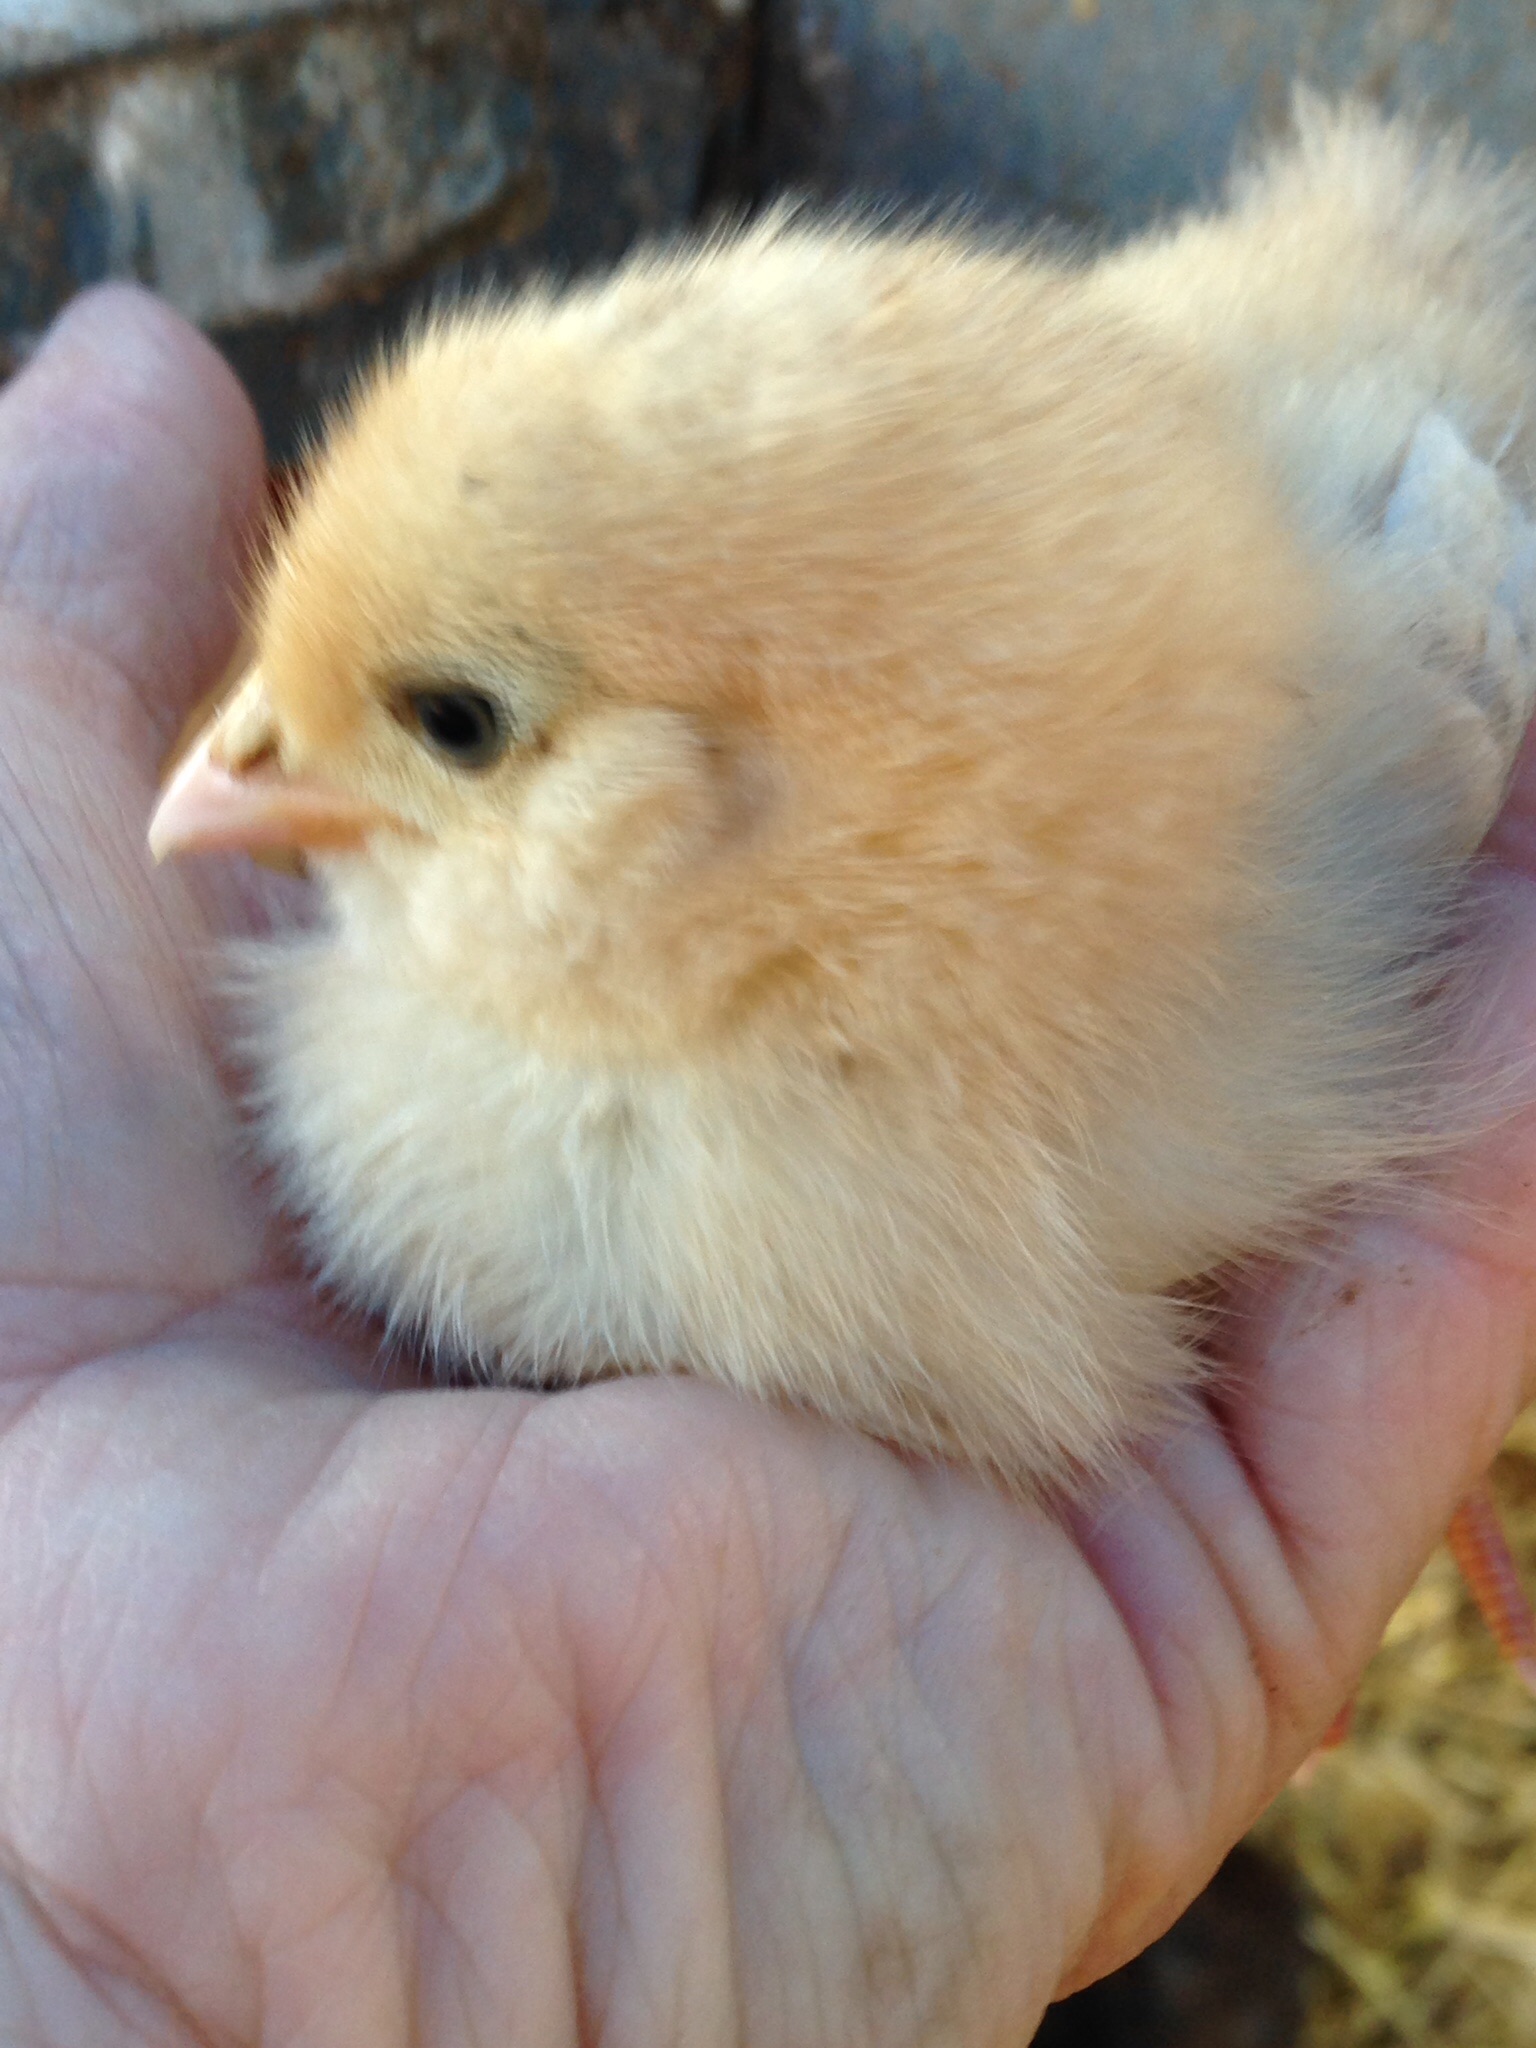 Chick #1